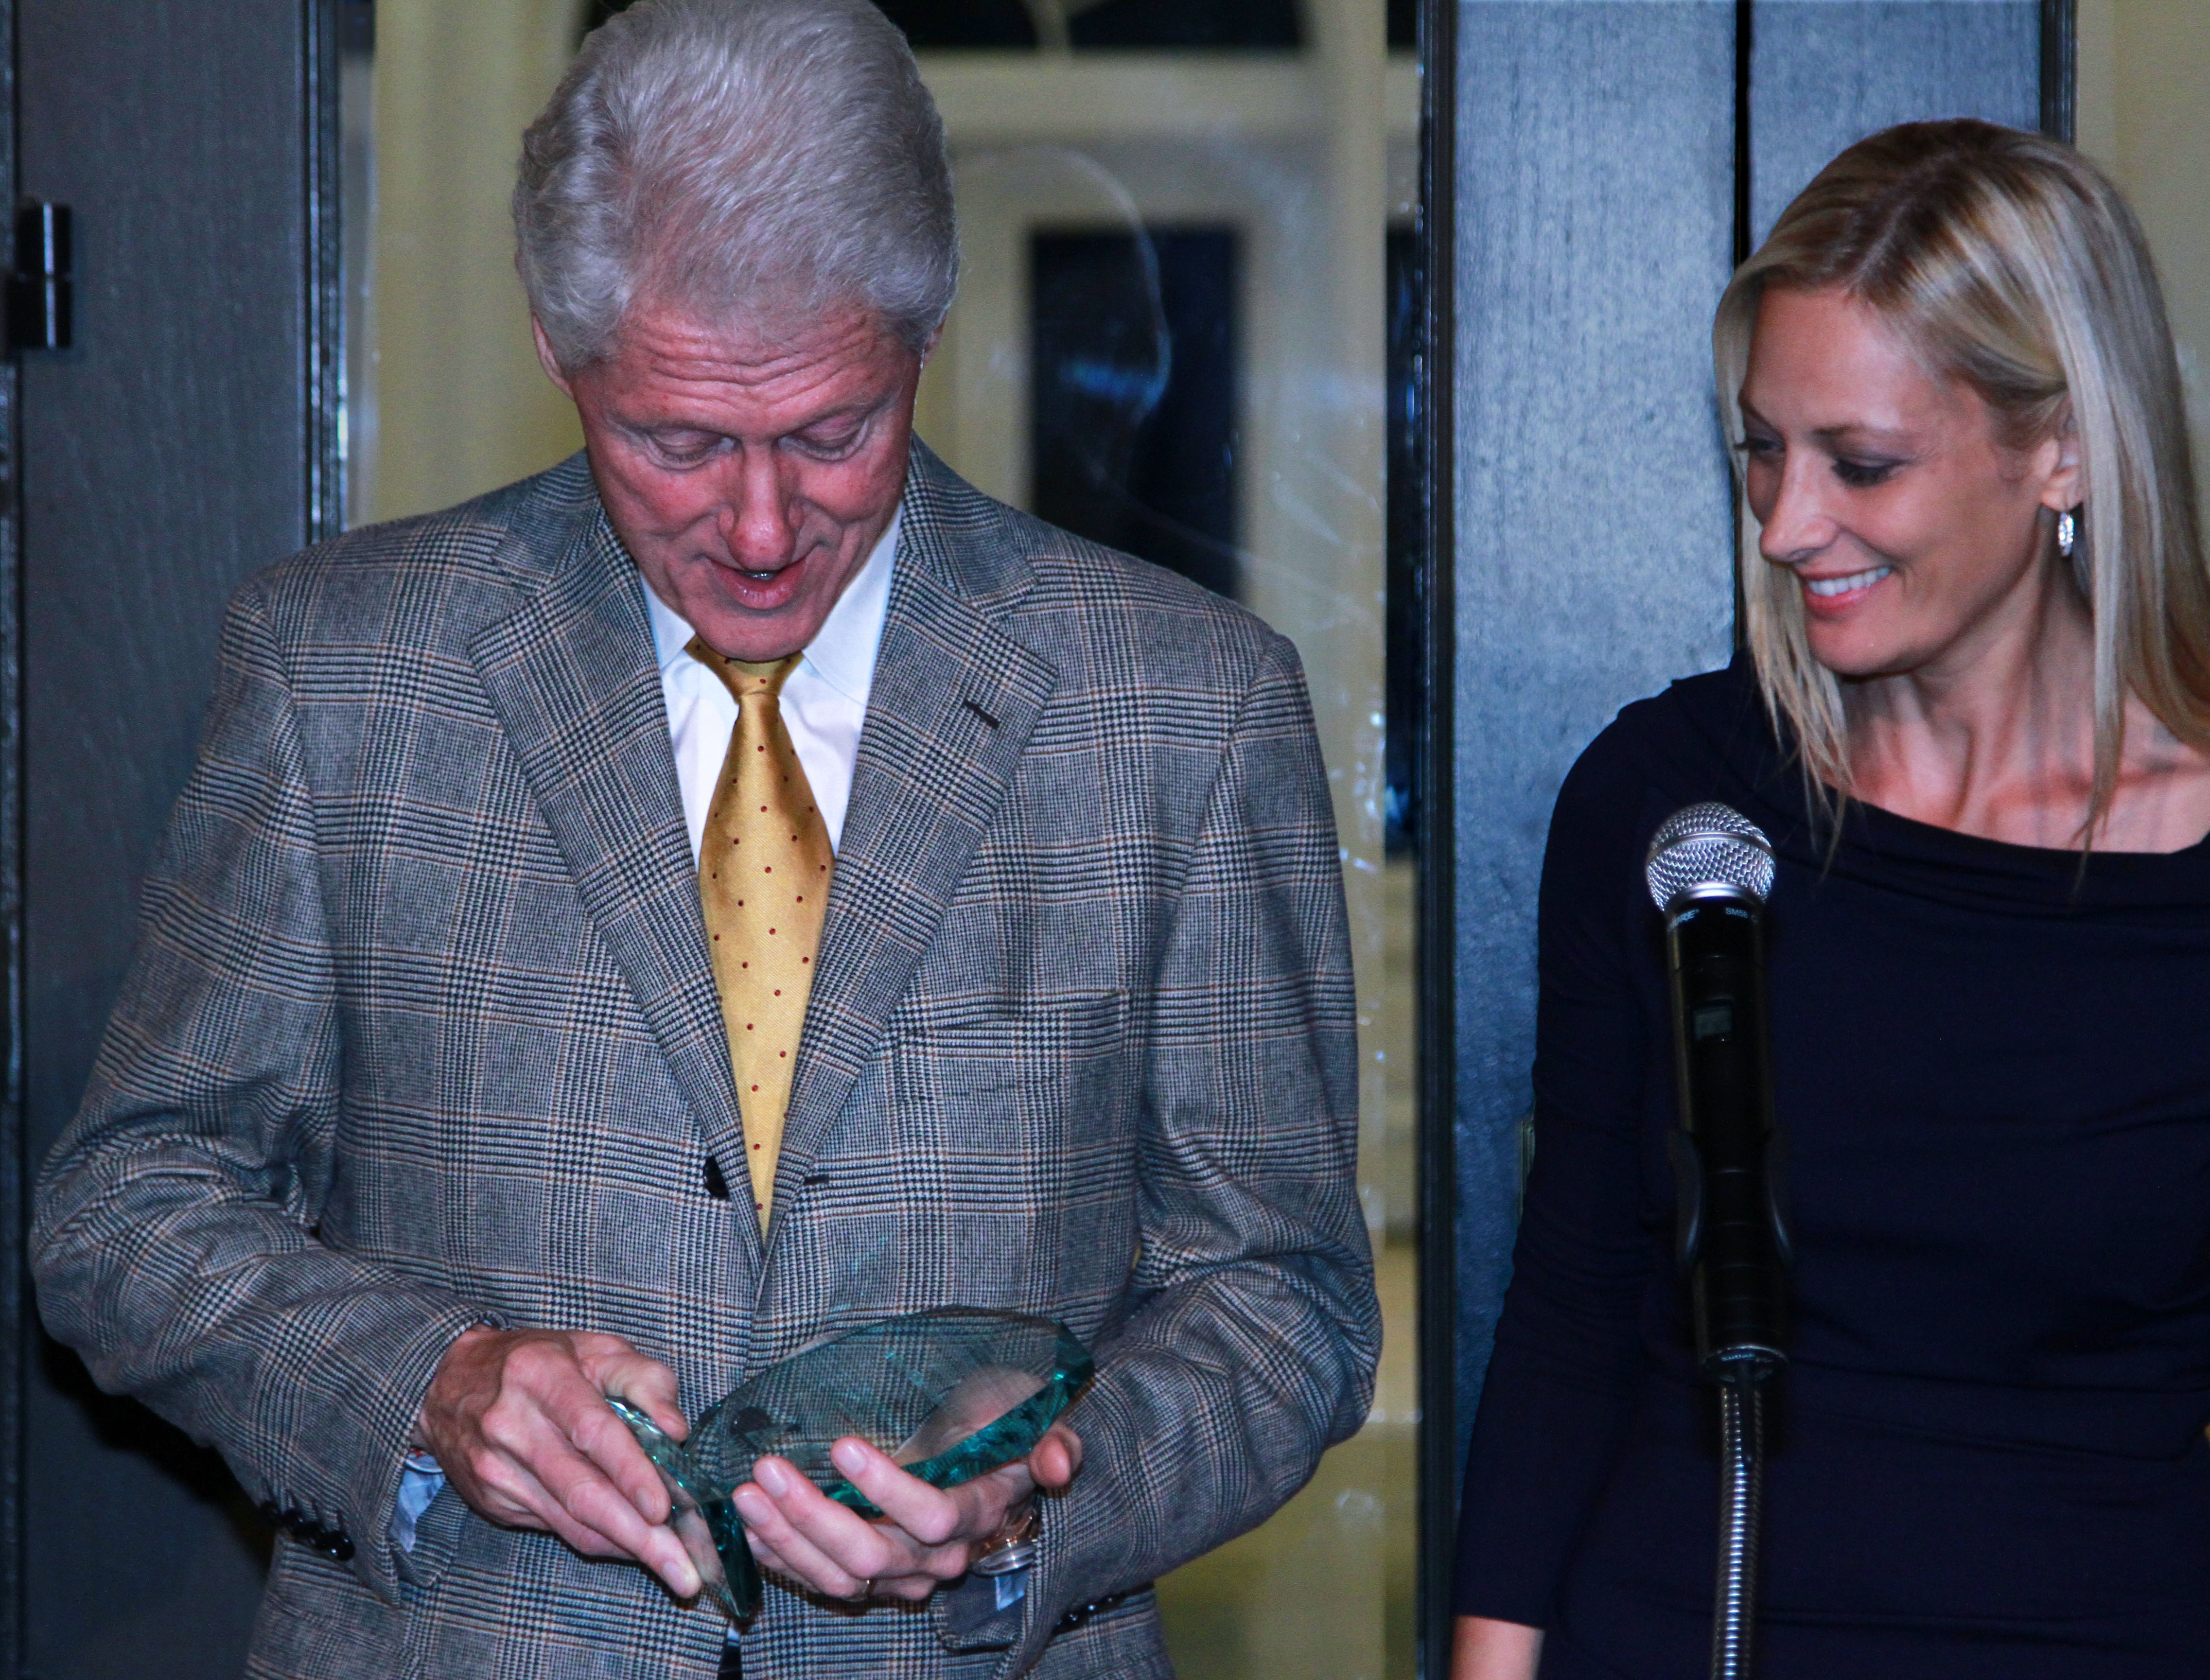 Ambassador for the Clinton Global Initiative, Jamee Natella, presenting an award to President Bill Clinton.